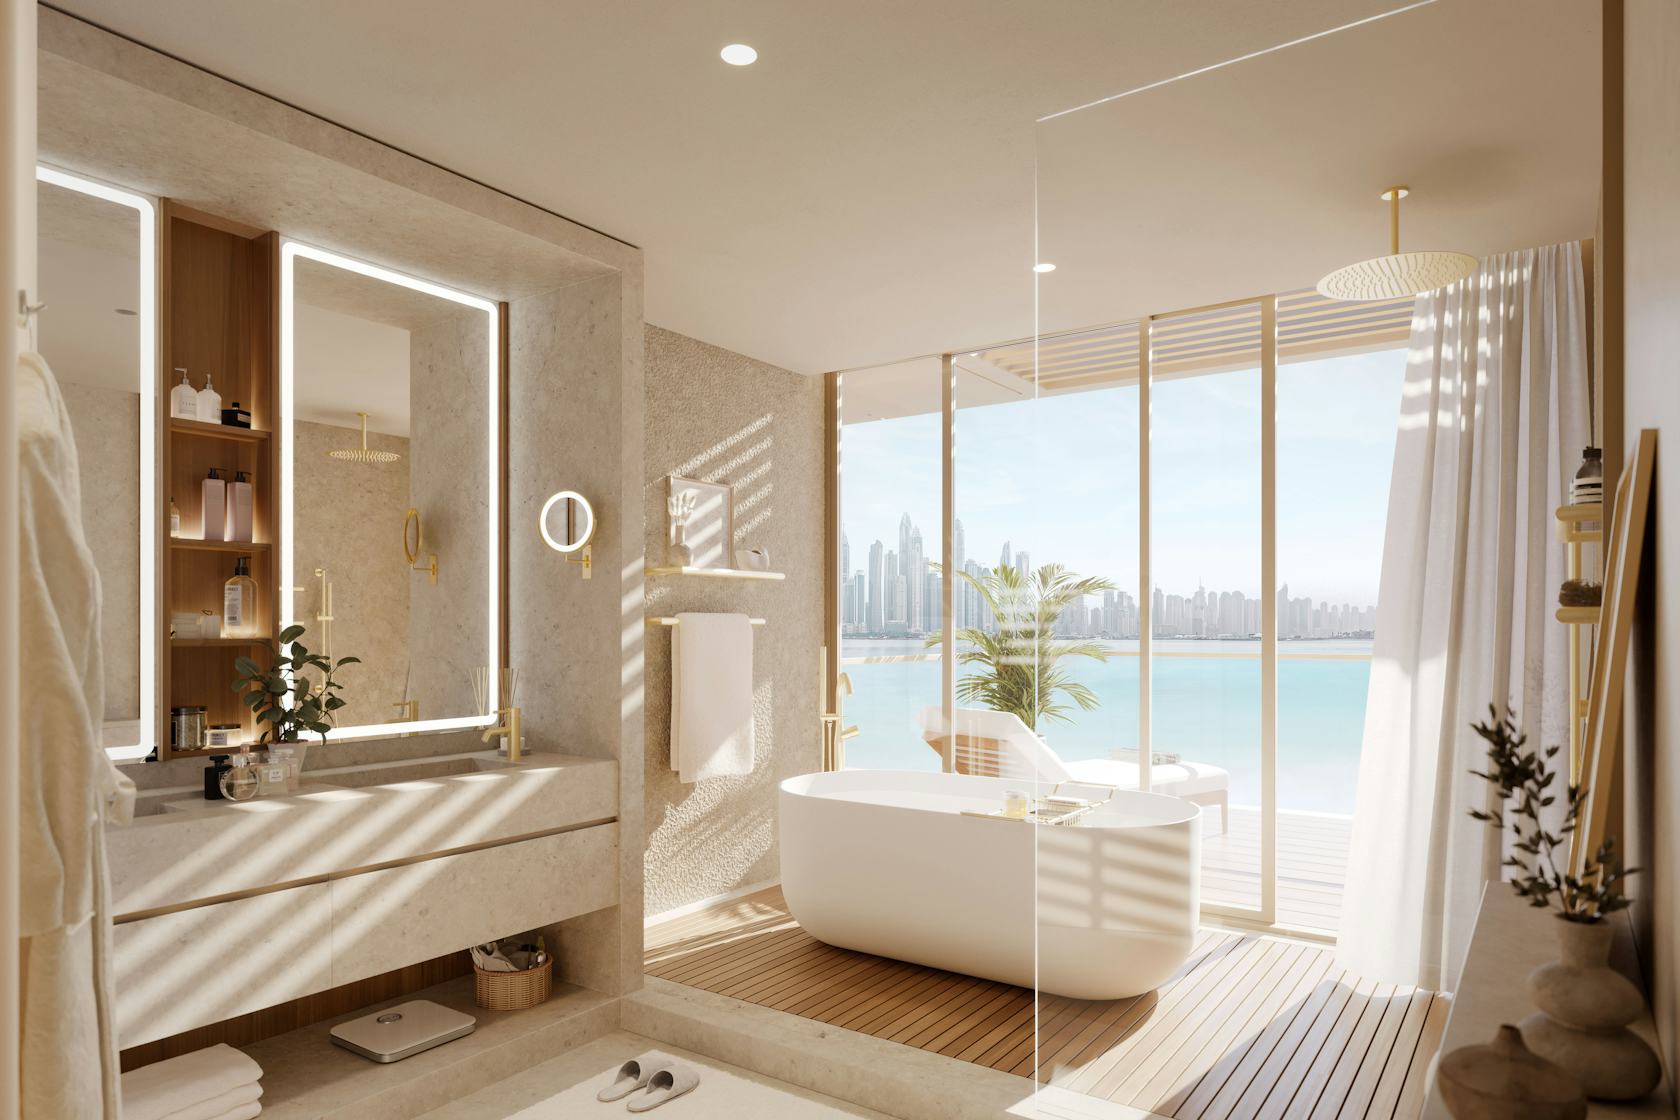 bathing bathtub tub person interior design indoors home decor